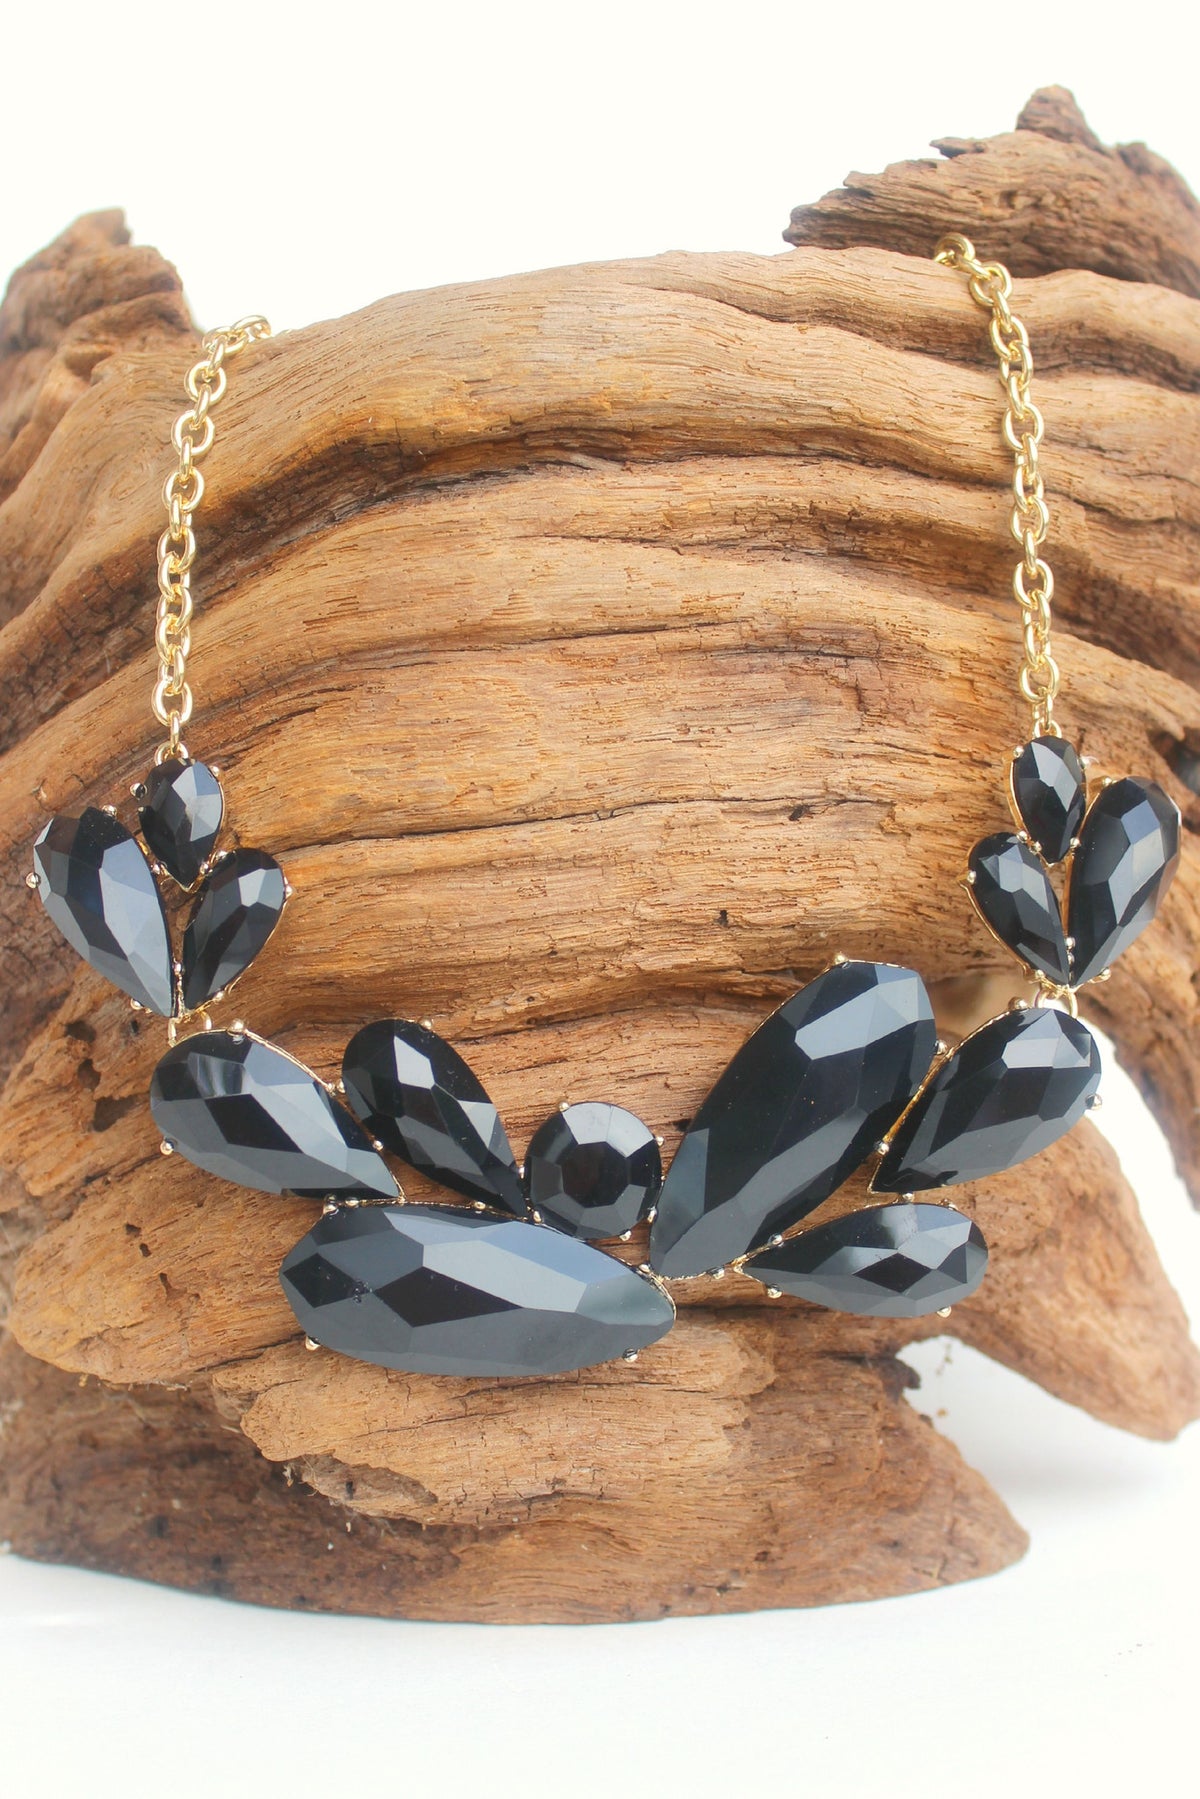 Teardrop Beads Necklace, Black